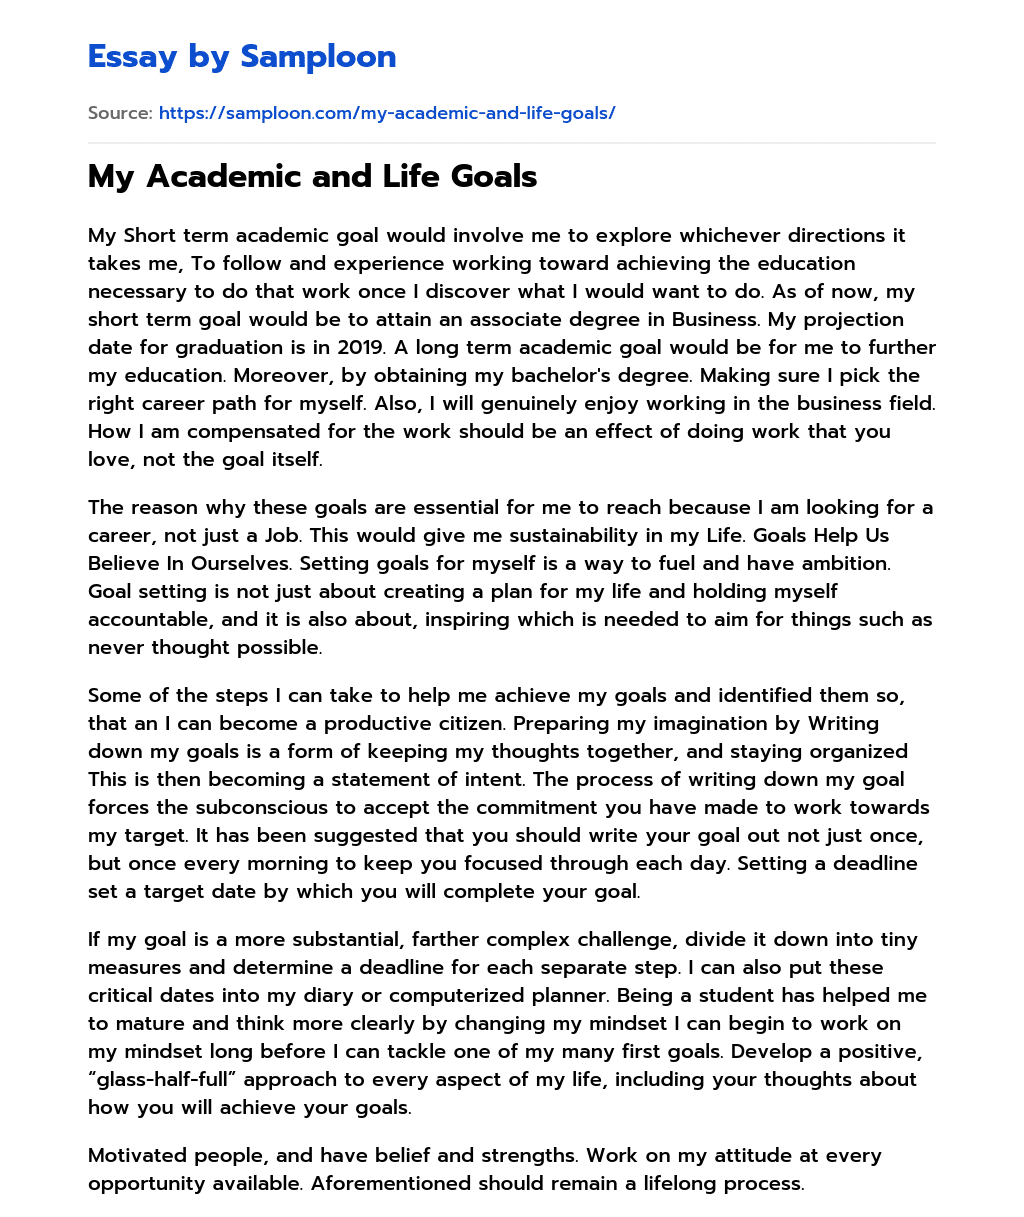 My Academic and Life Goals essay